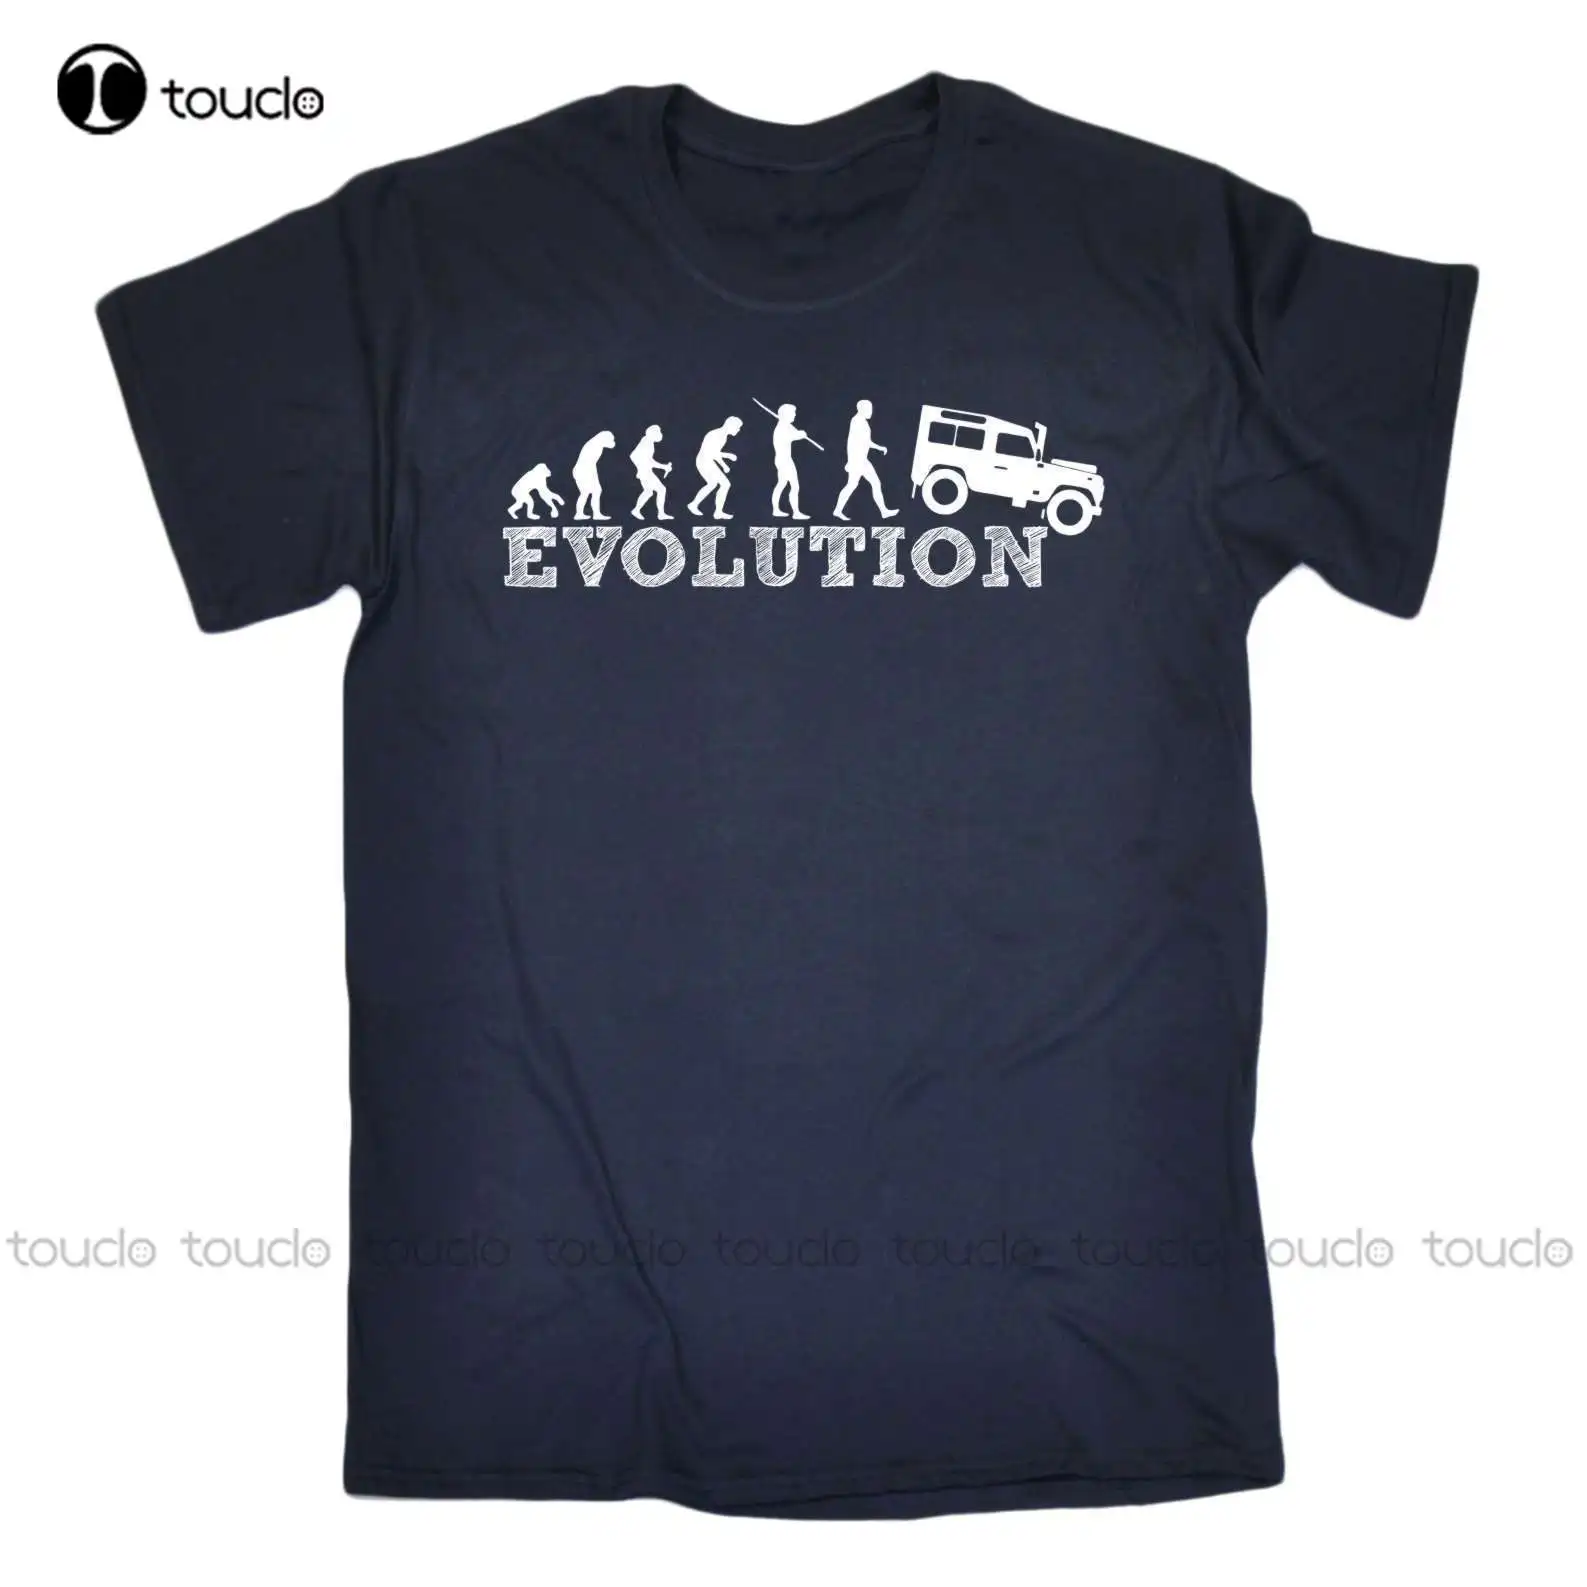 Neueste Männer T-Shirt Mode 4X4 Evolution Lustige Witz Auto Off Road Hobby Abenteuer Road Trip T-Shirt O Neck T-shirt t shirt